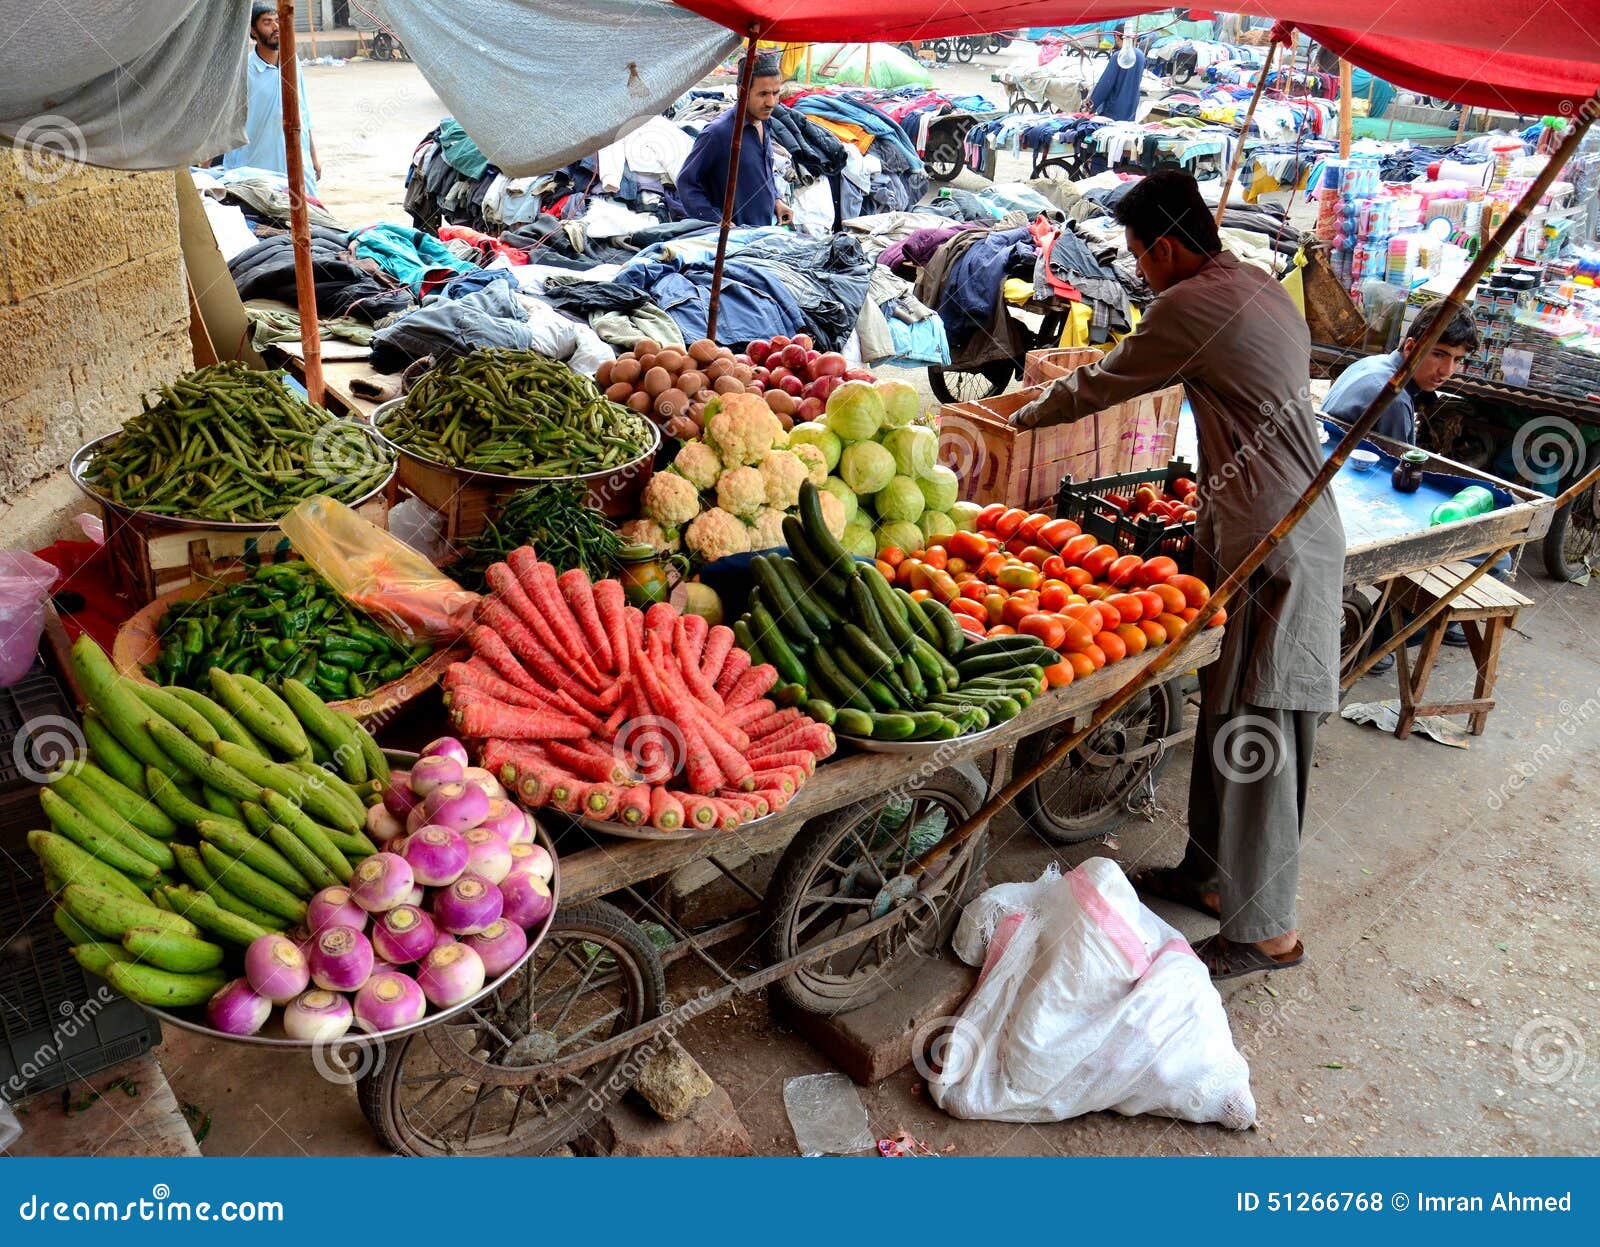 fruit-vegetable-seller-tends-to-his-cart-outside-empress-market-karachi-pakistan-february-man-unpacks-fruits-vegetables-add-51266768.jpg